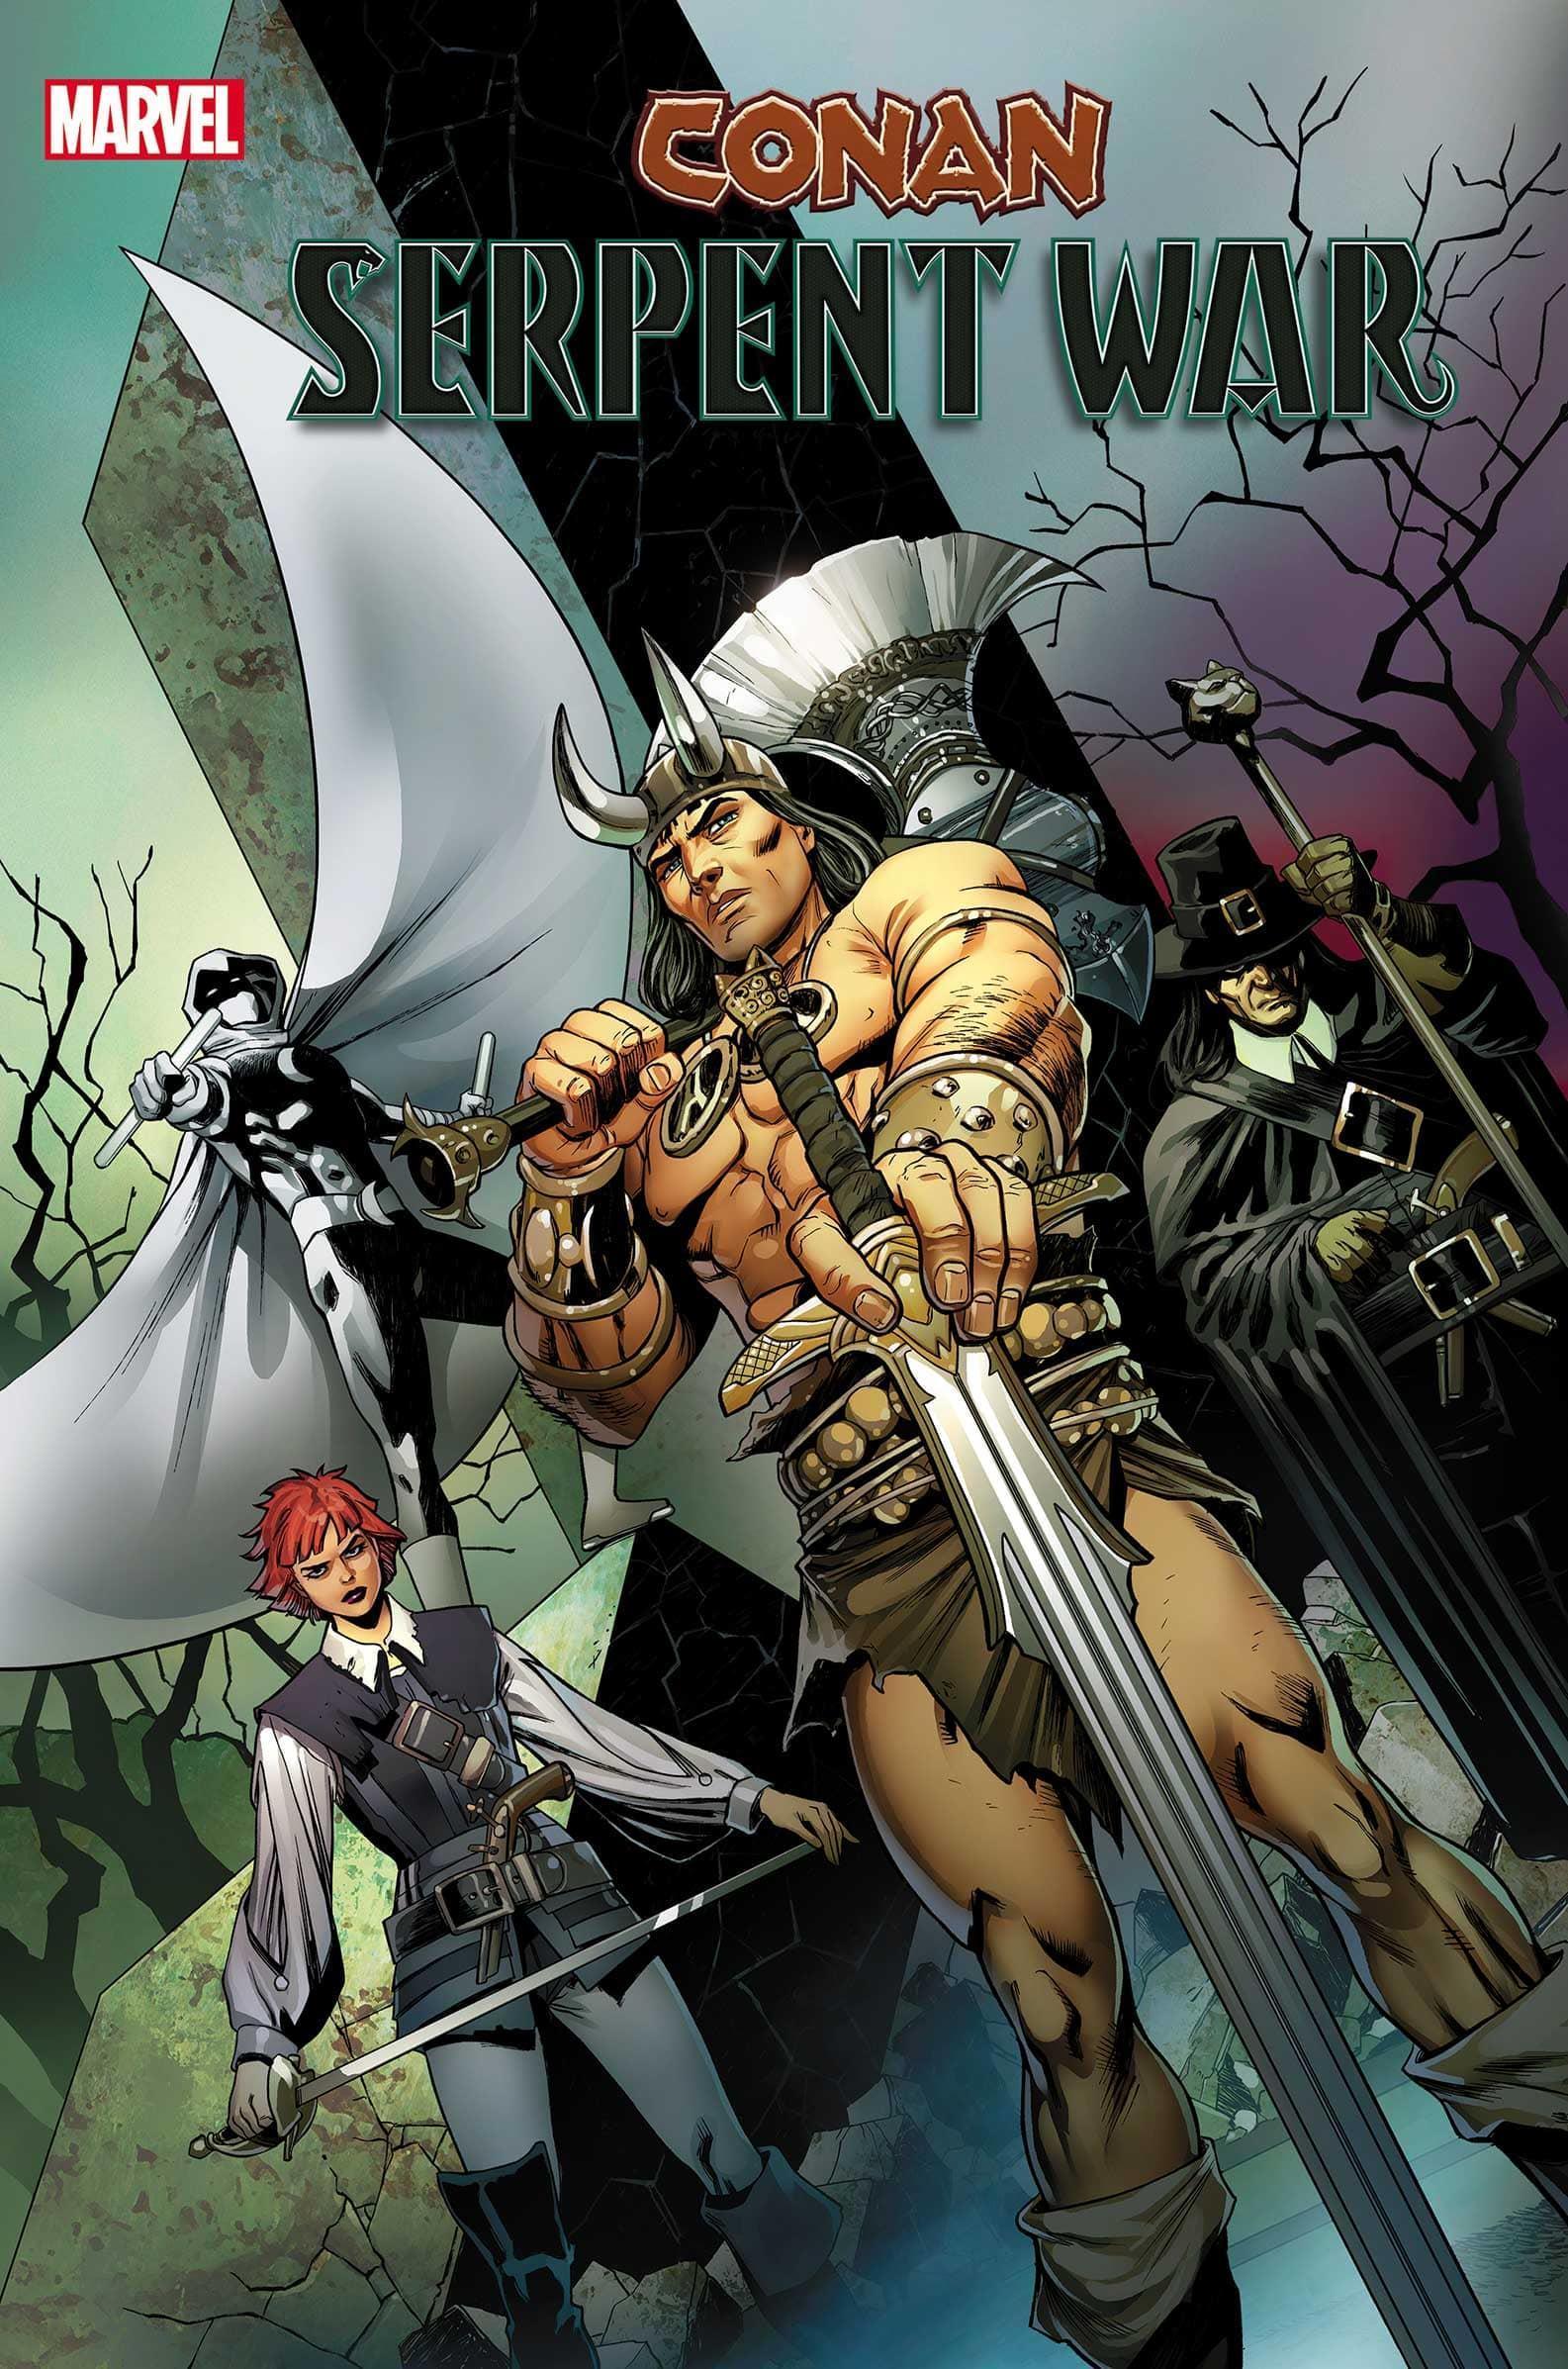 CONAN SERPENT WAR #1 CARLOS PACHECO FOLDED PROMO POSTER - Kings Comics